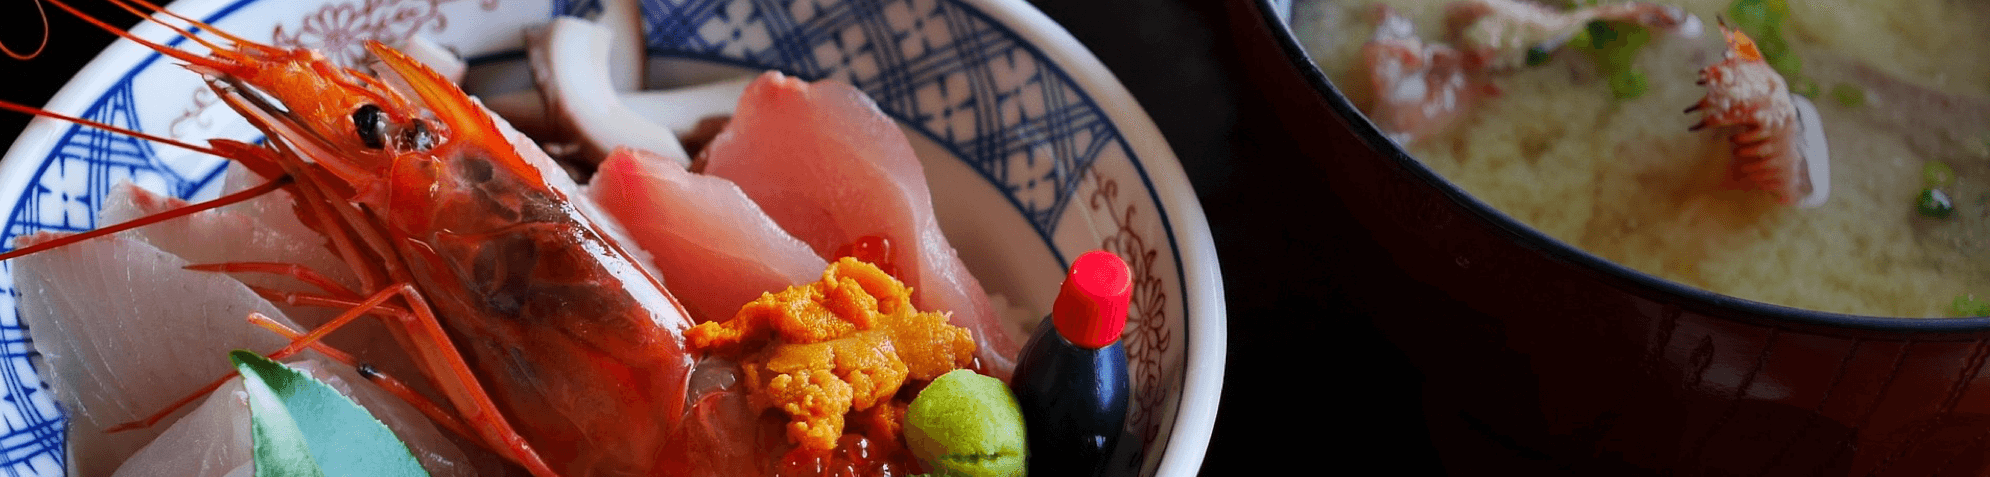 Explore the food in Japan